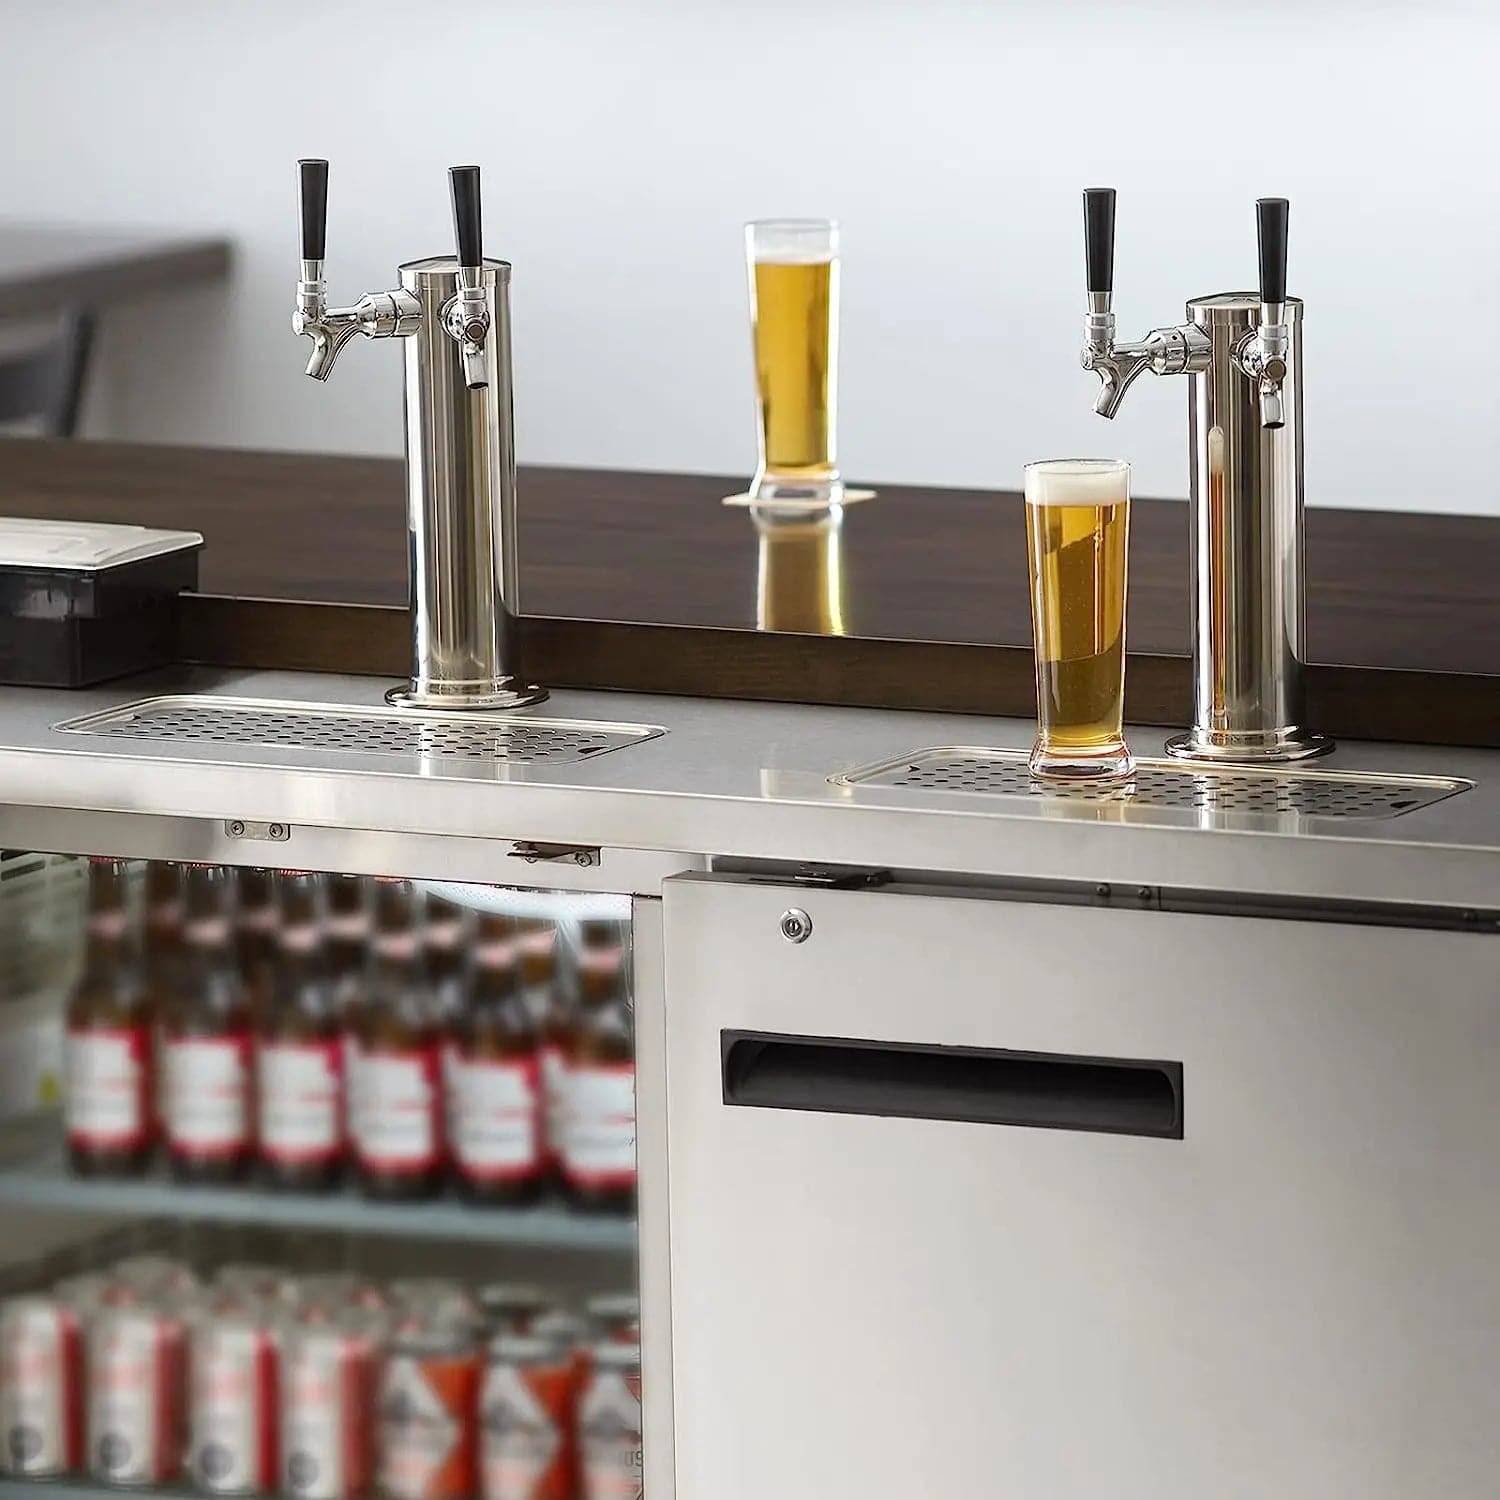 tmcraft dual faucet draft beer tower dispenser show photo